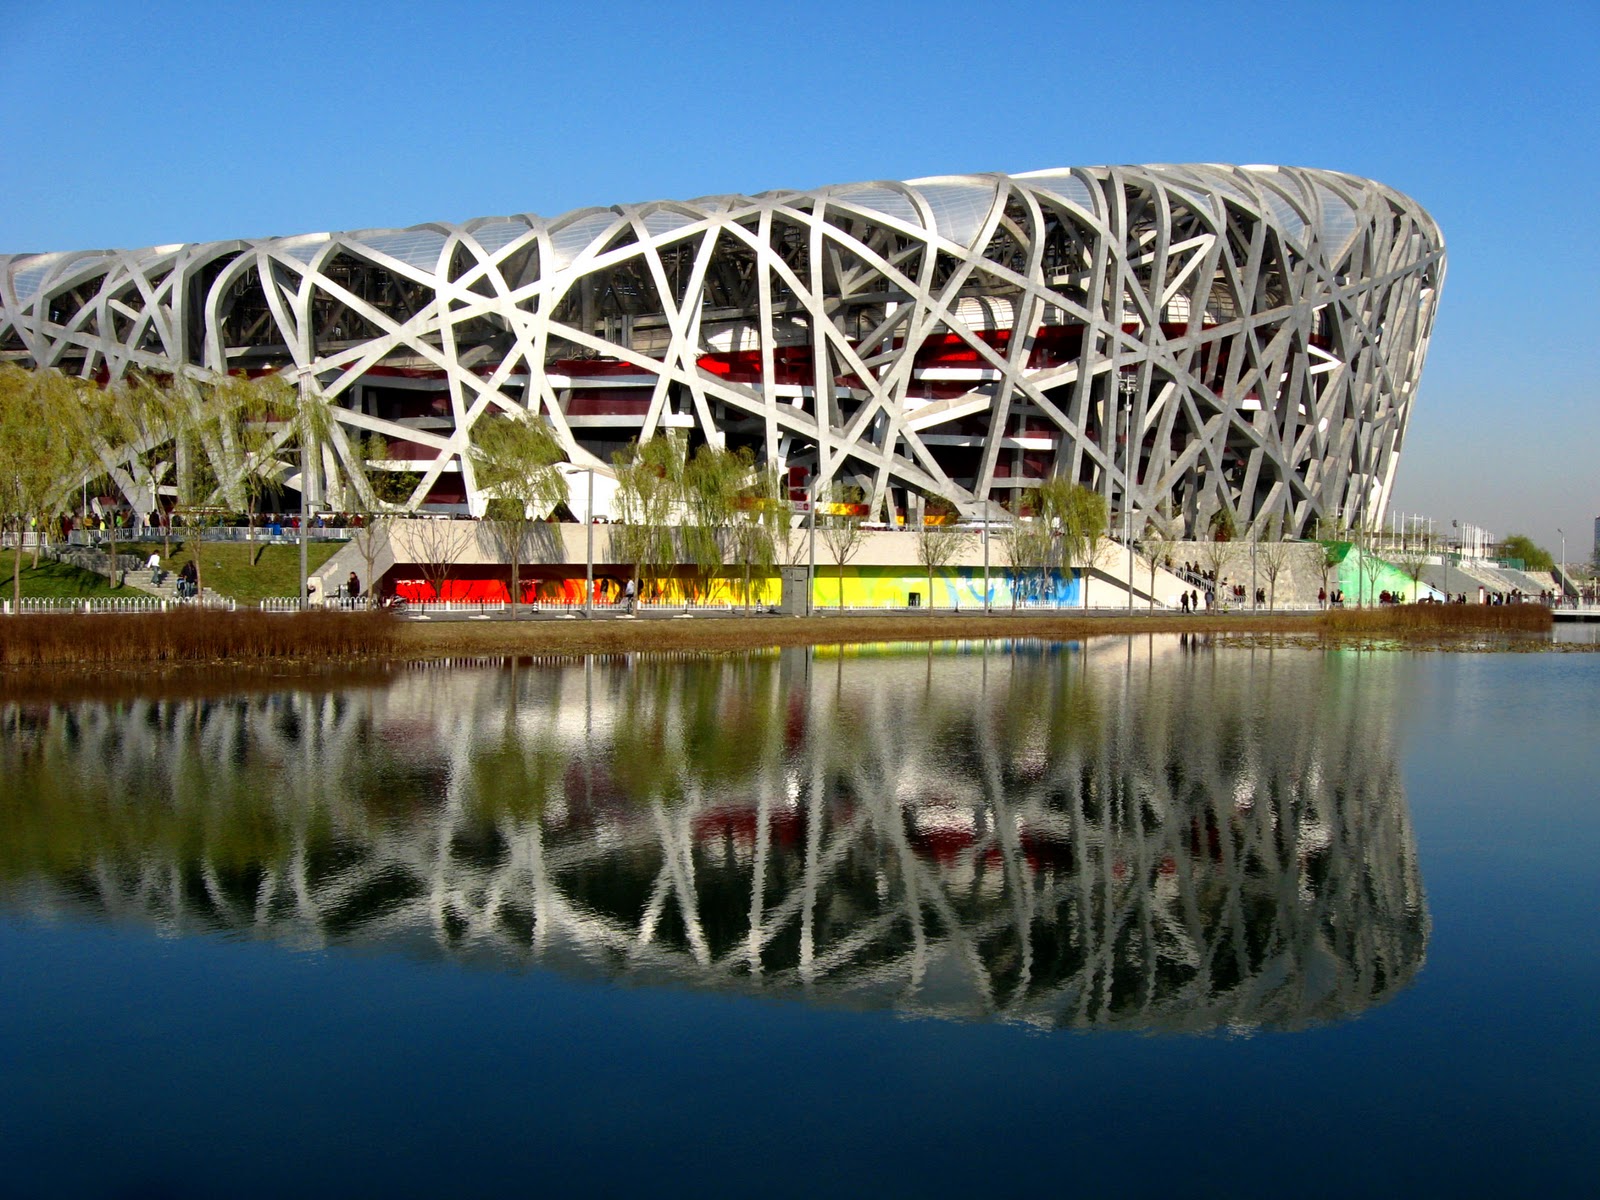 Welcom to Wallpaper: 9. Beijing National Stadium (91,000)